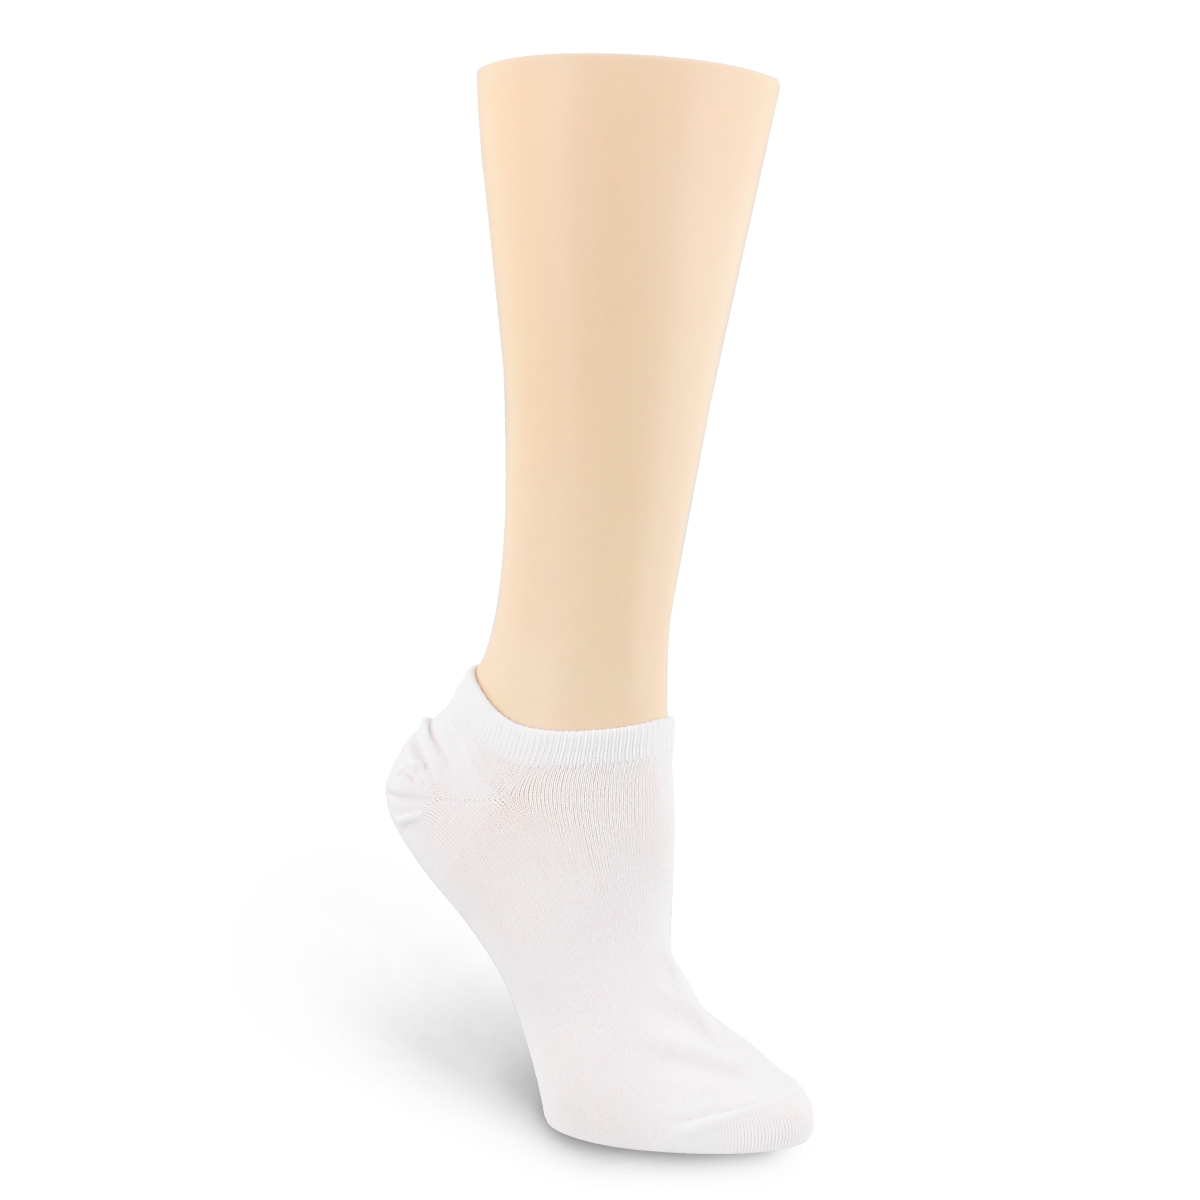 Women's CONVERSE white ankle socks - 3 pack